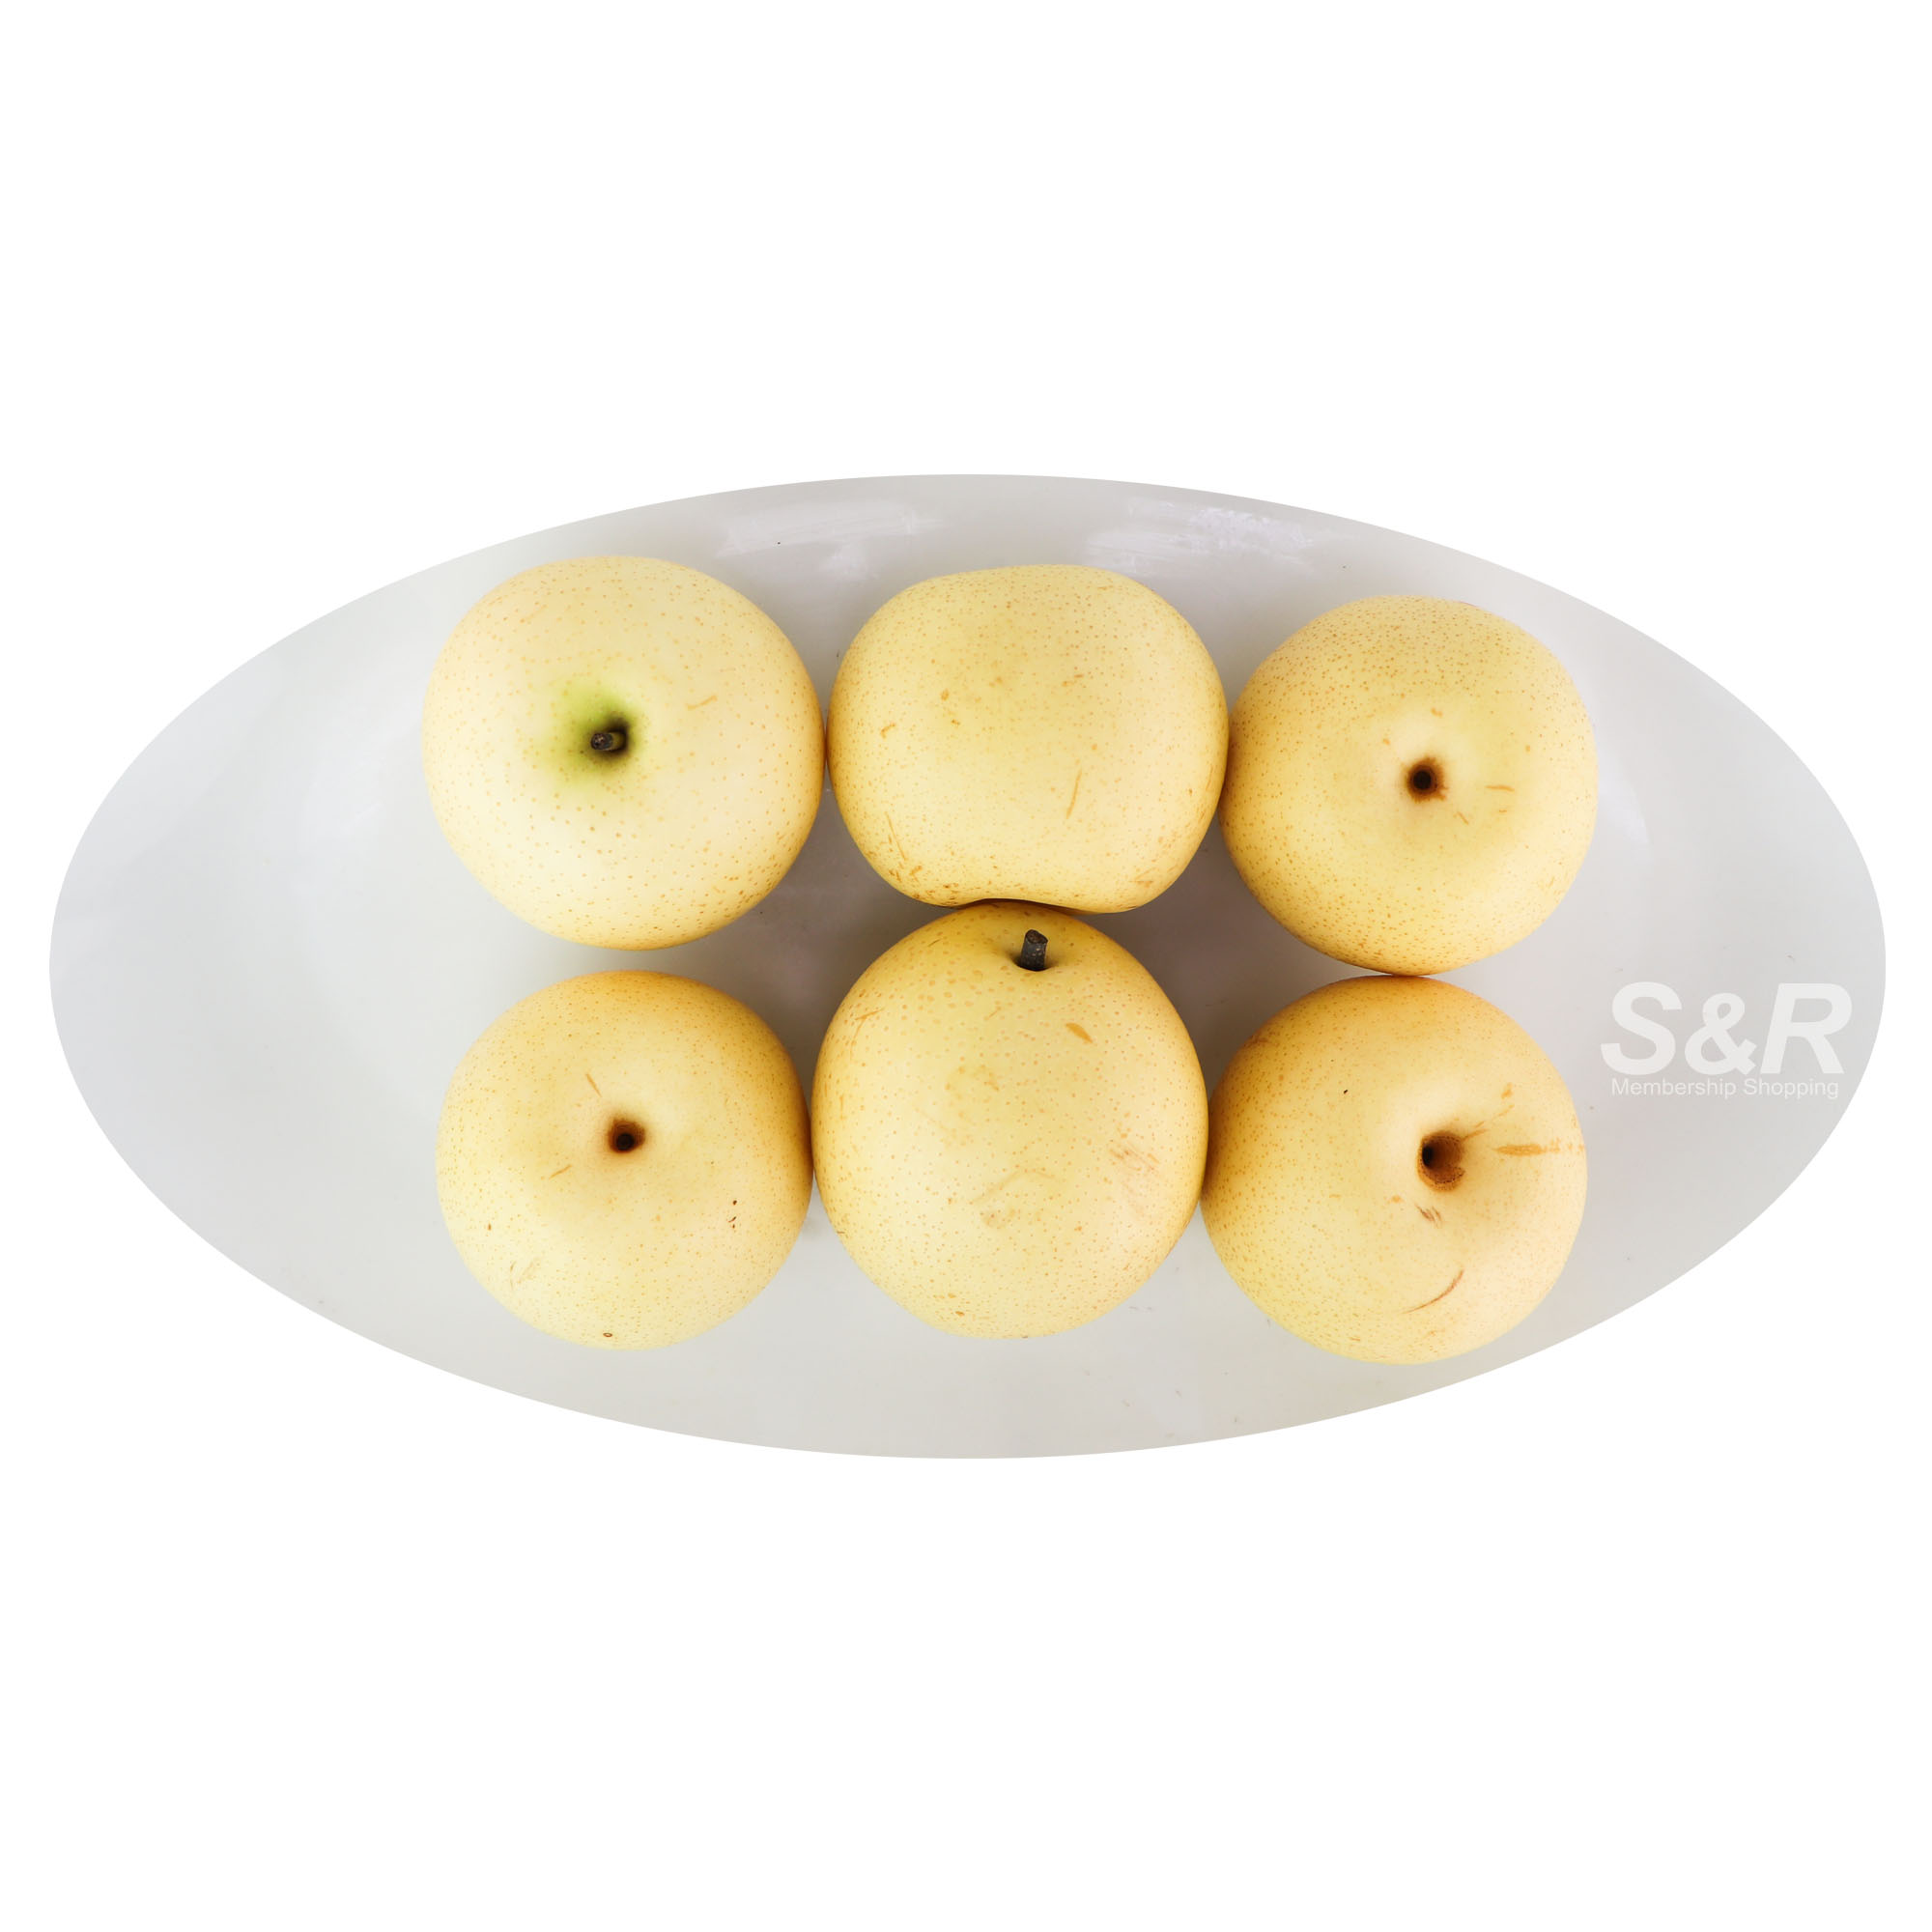 S&R Century Pears 6pcs